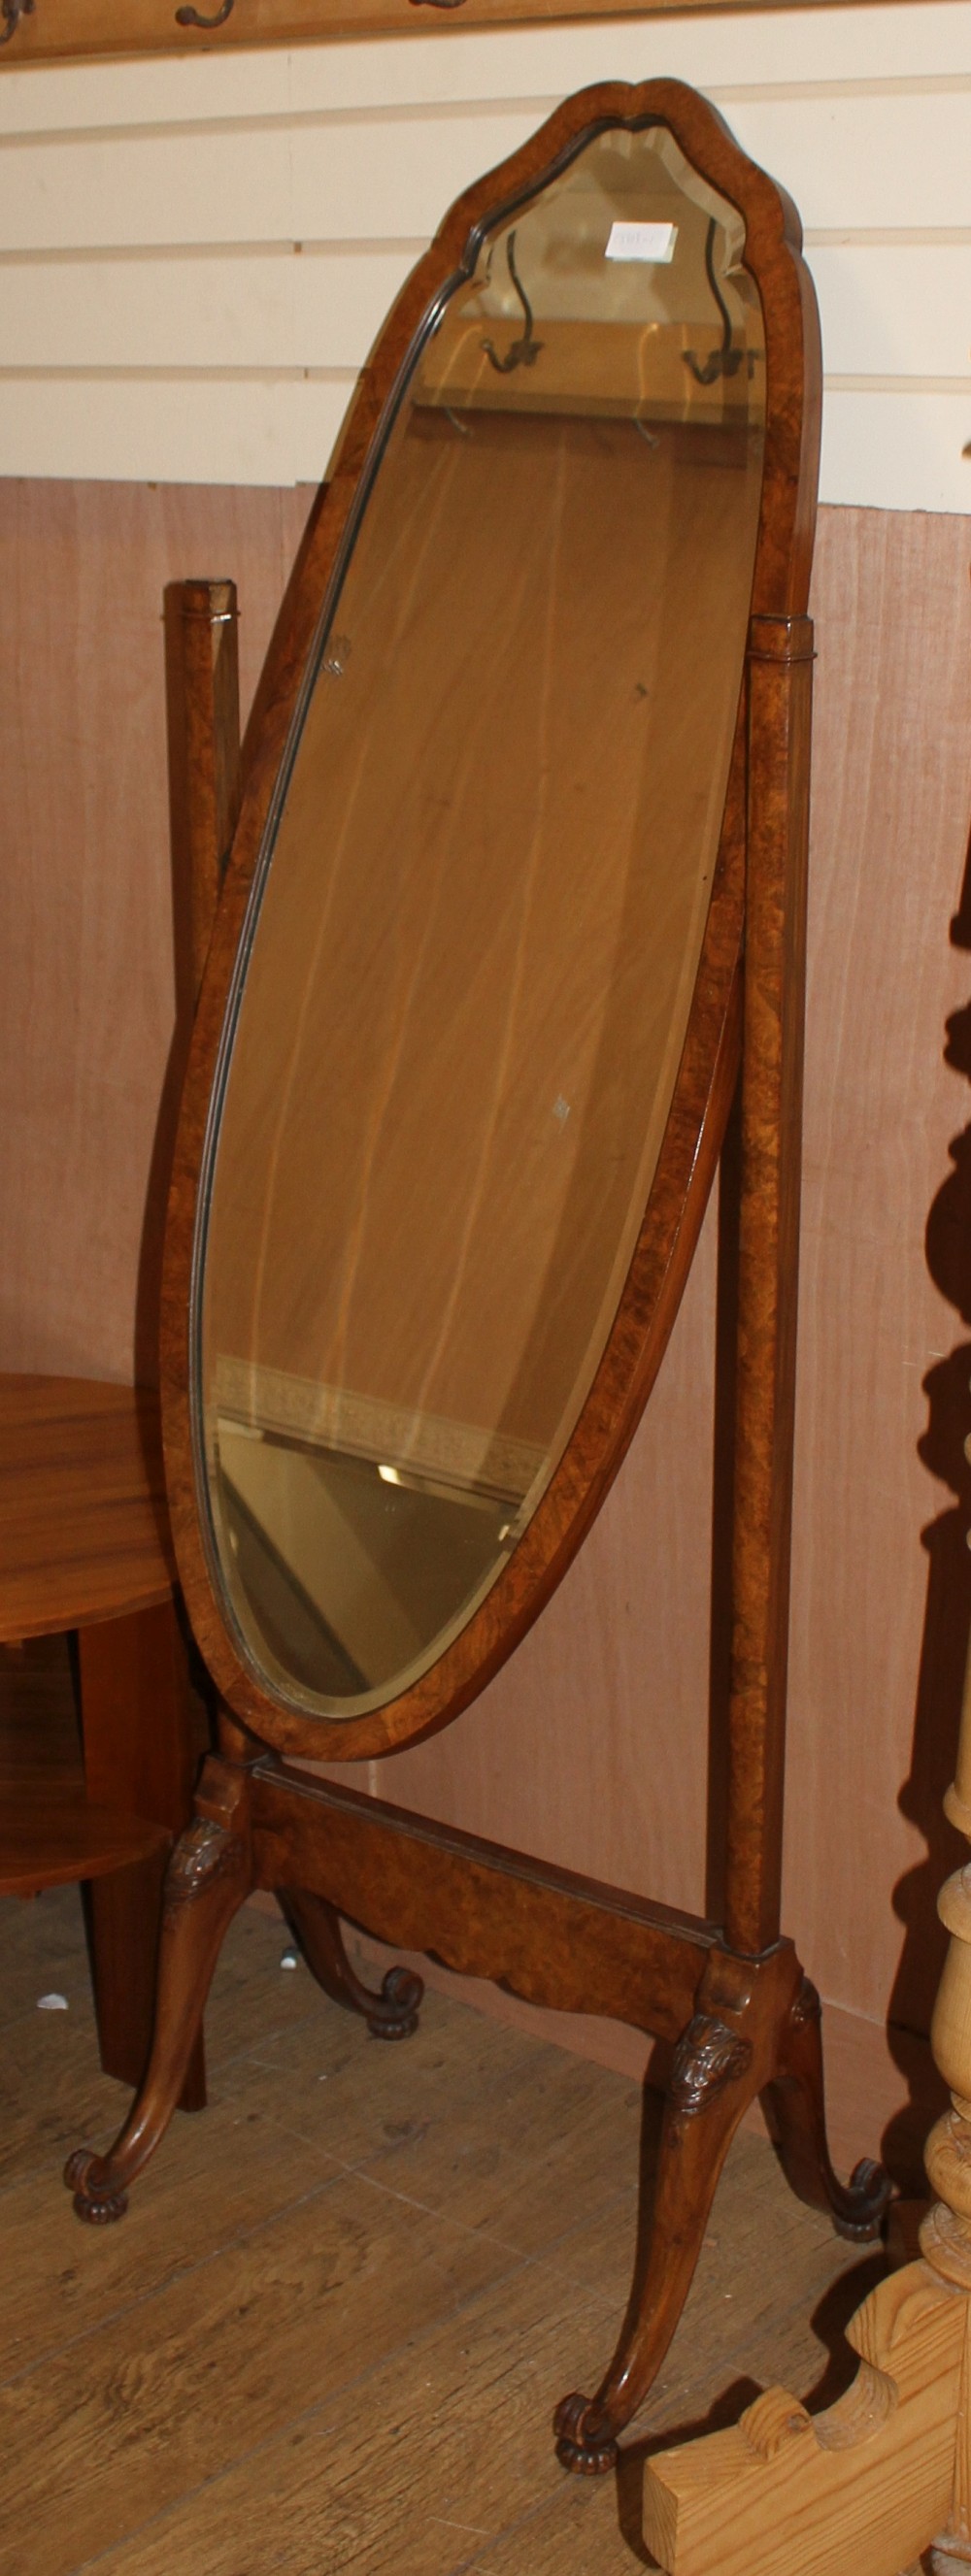 A walnut cheval mirror